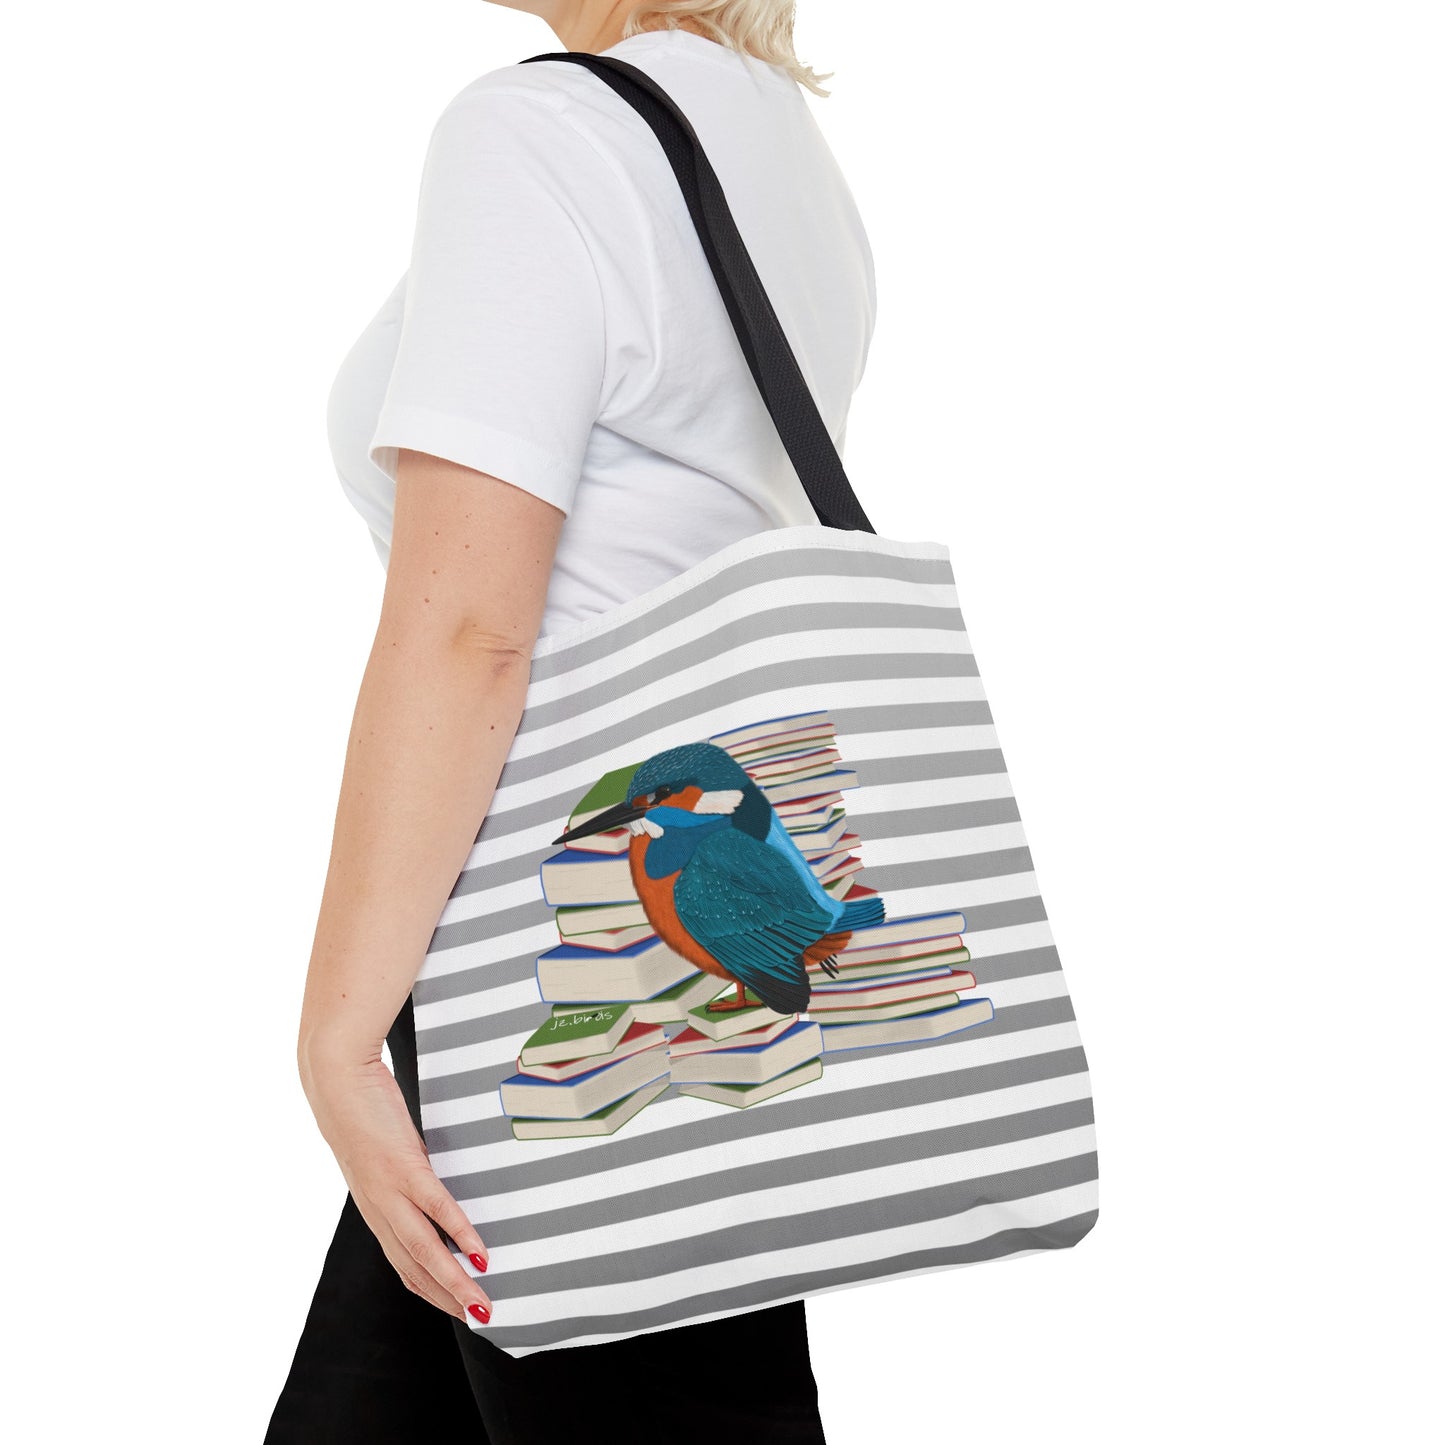 Kingfisher Bird and Books Birdlover Bookworm Tote Bag 16"x16"